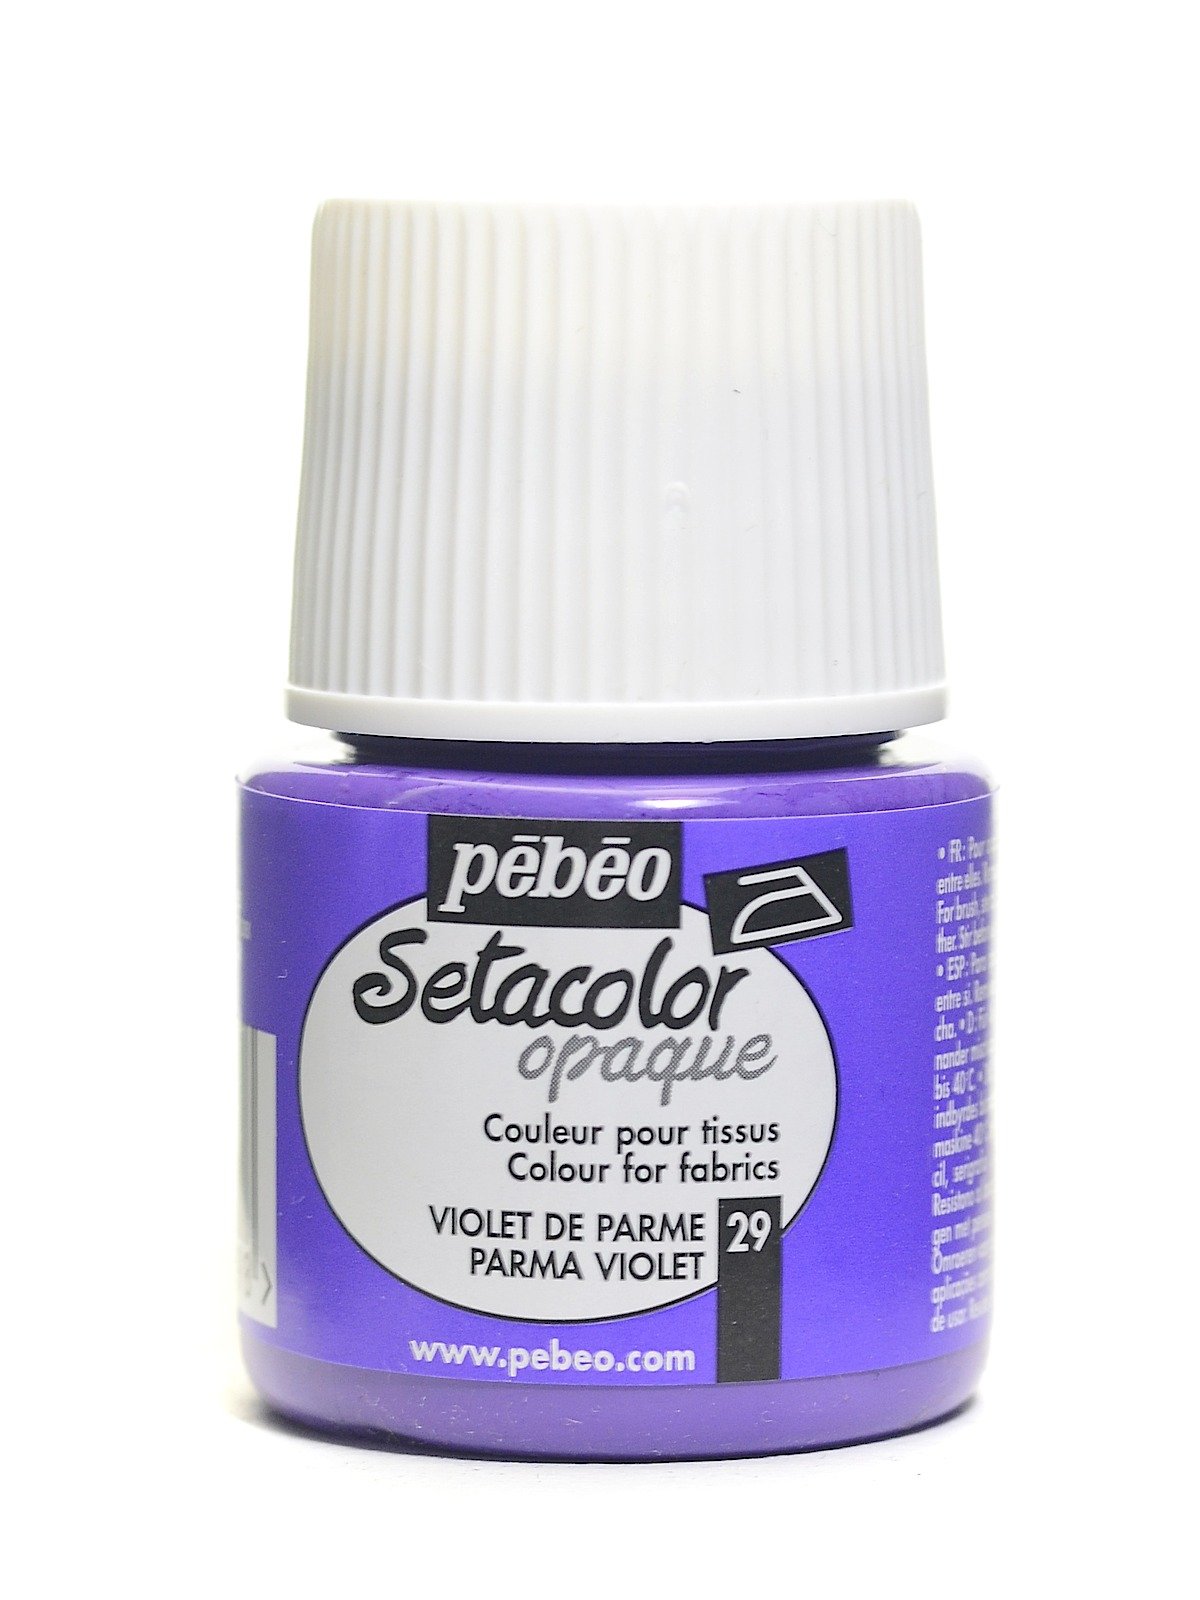 Pebeo Setacolor Opak Kumaş Boyası 45ml 29 Parma Violet